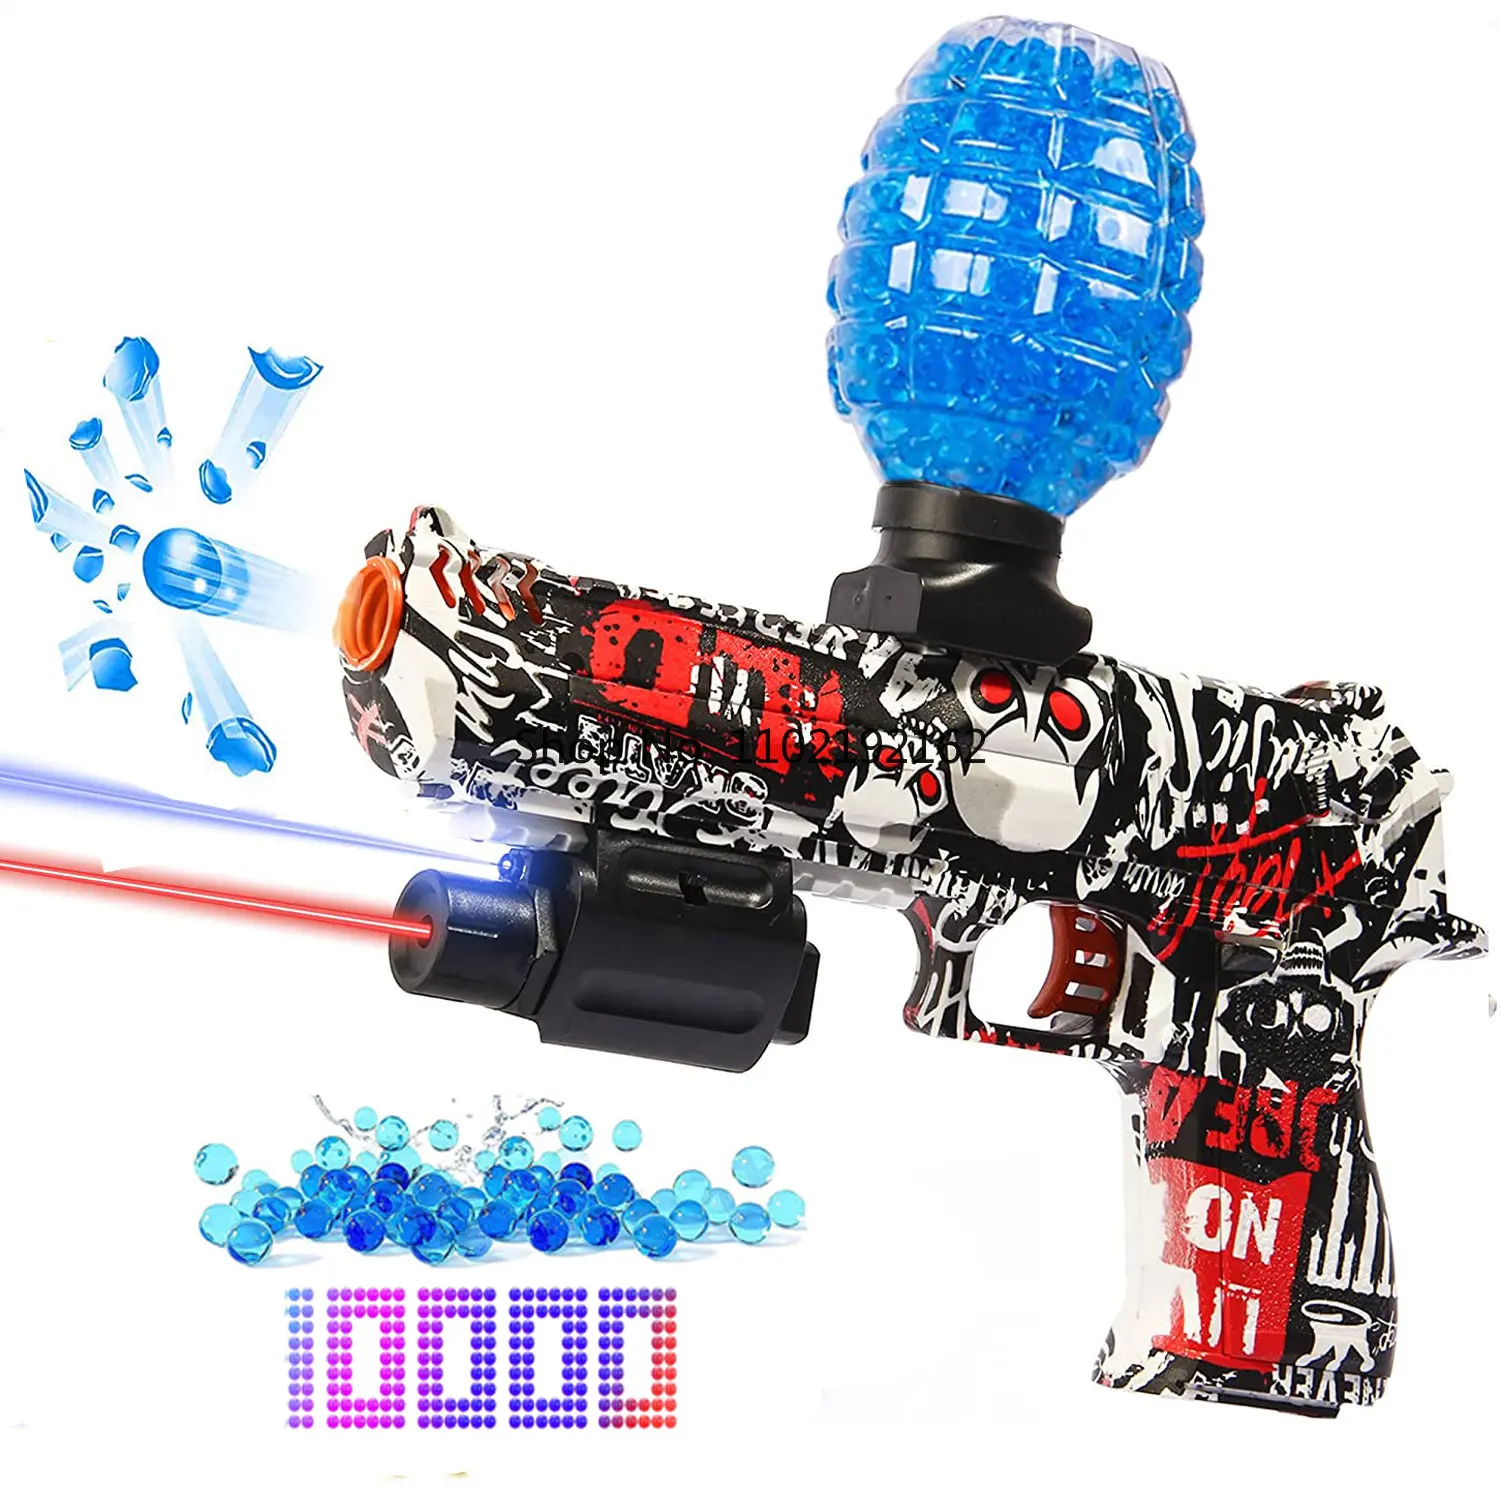 

Electric Water Beads Gel Blaster Desert Eagle Splatter Paint Ball Gun Automatic Pistol Weapon CS Fighting Outdoor Fun Shoot Toy